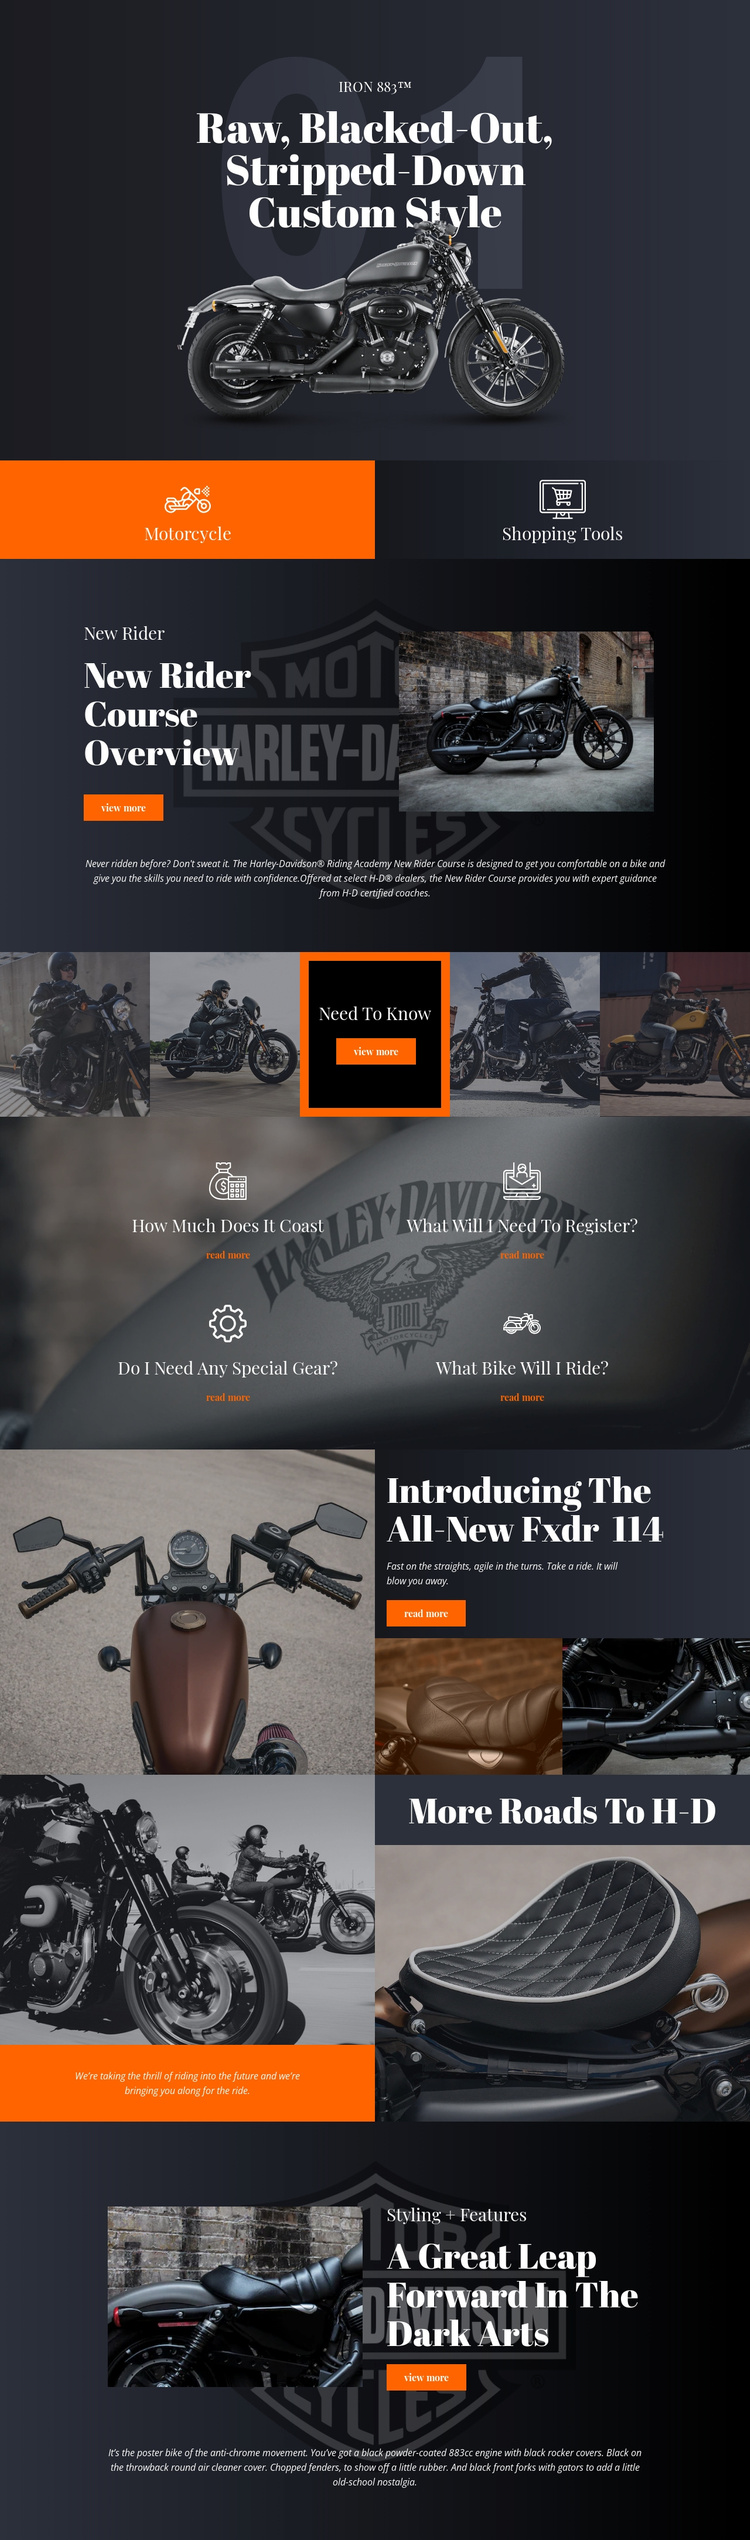 Harley Davidson Joomla Template